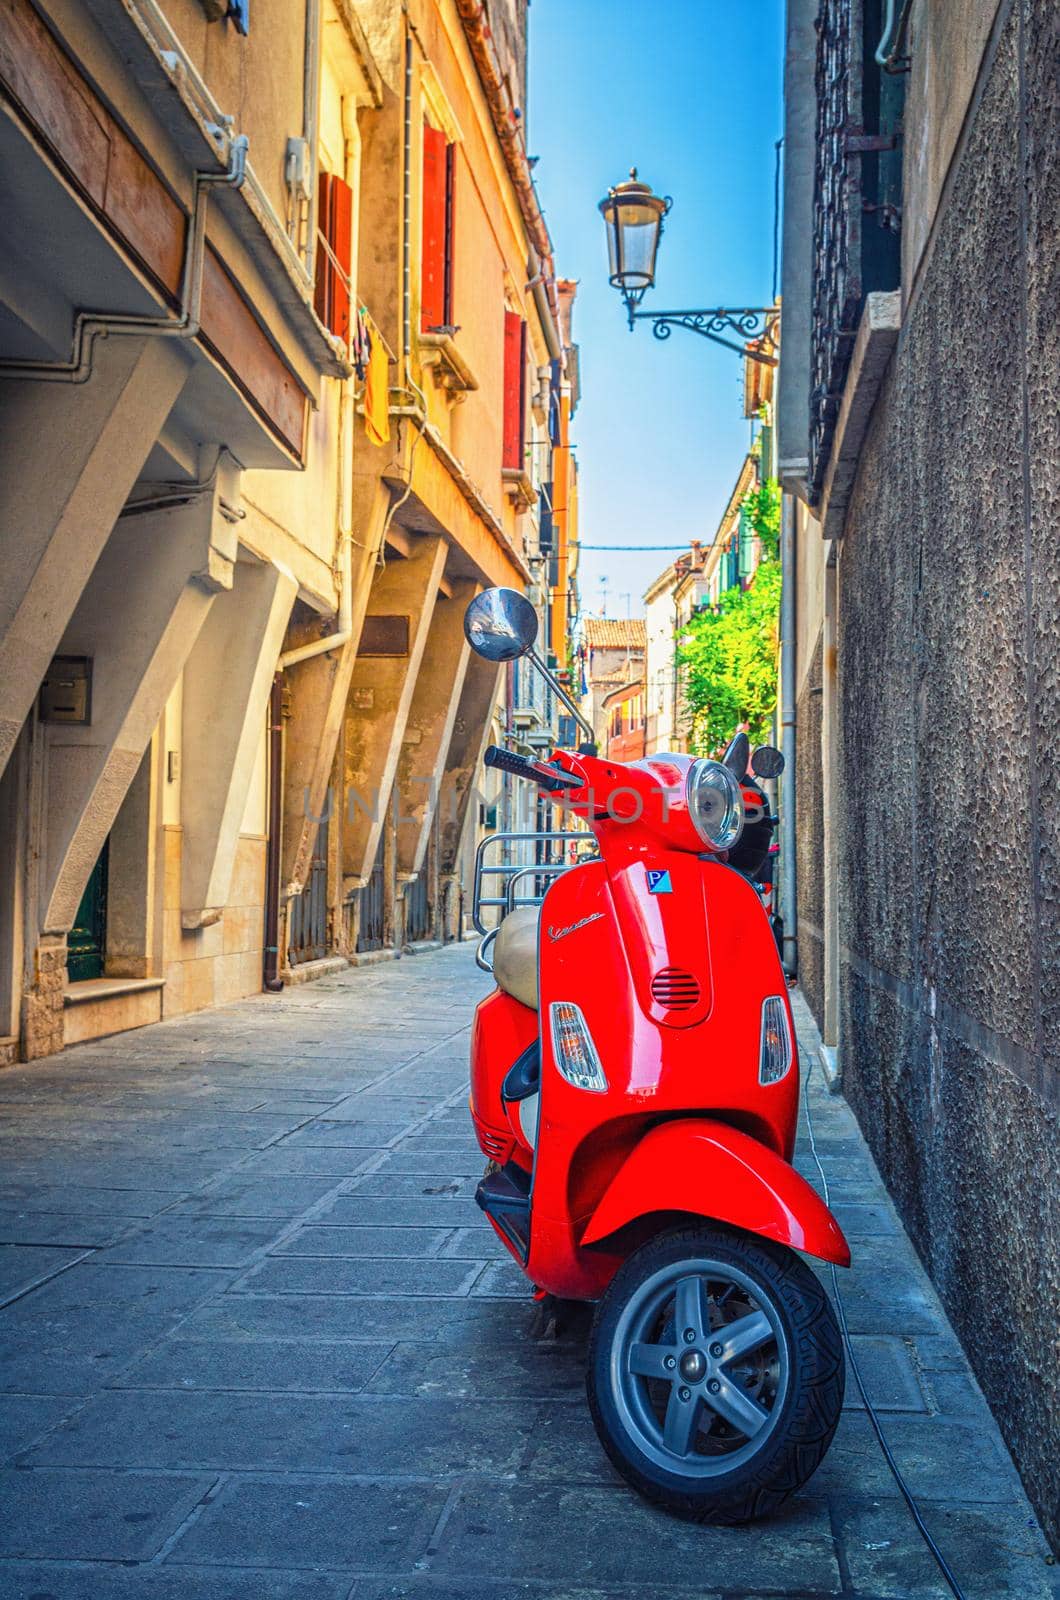 Red scooter motorbike Vespa in narrow italian street in historical town centre by Aliaksandr_Antanovich